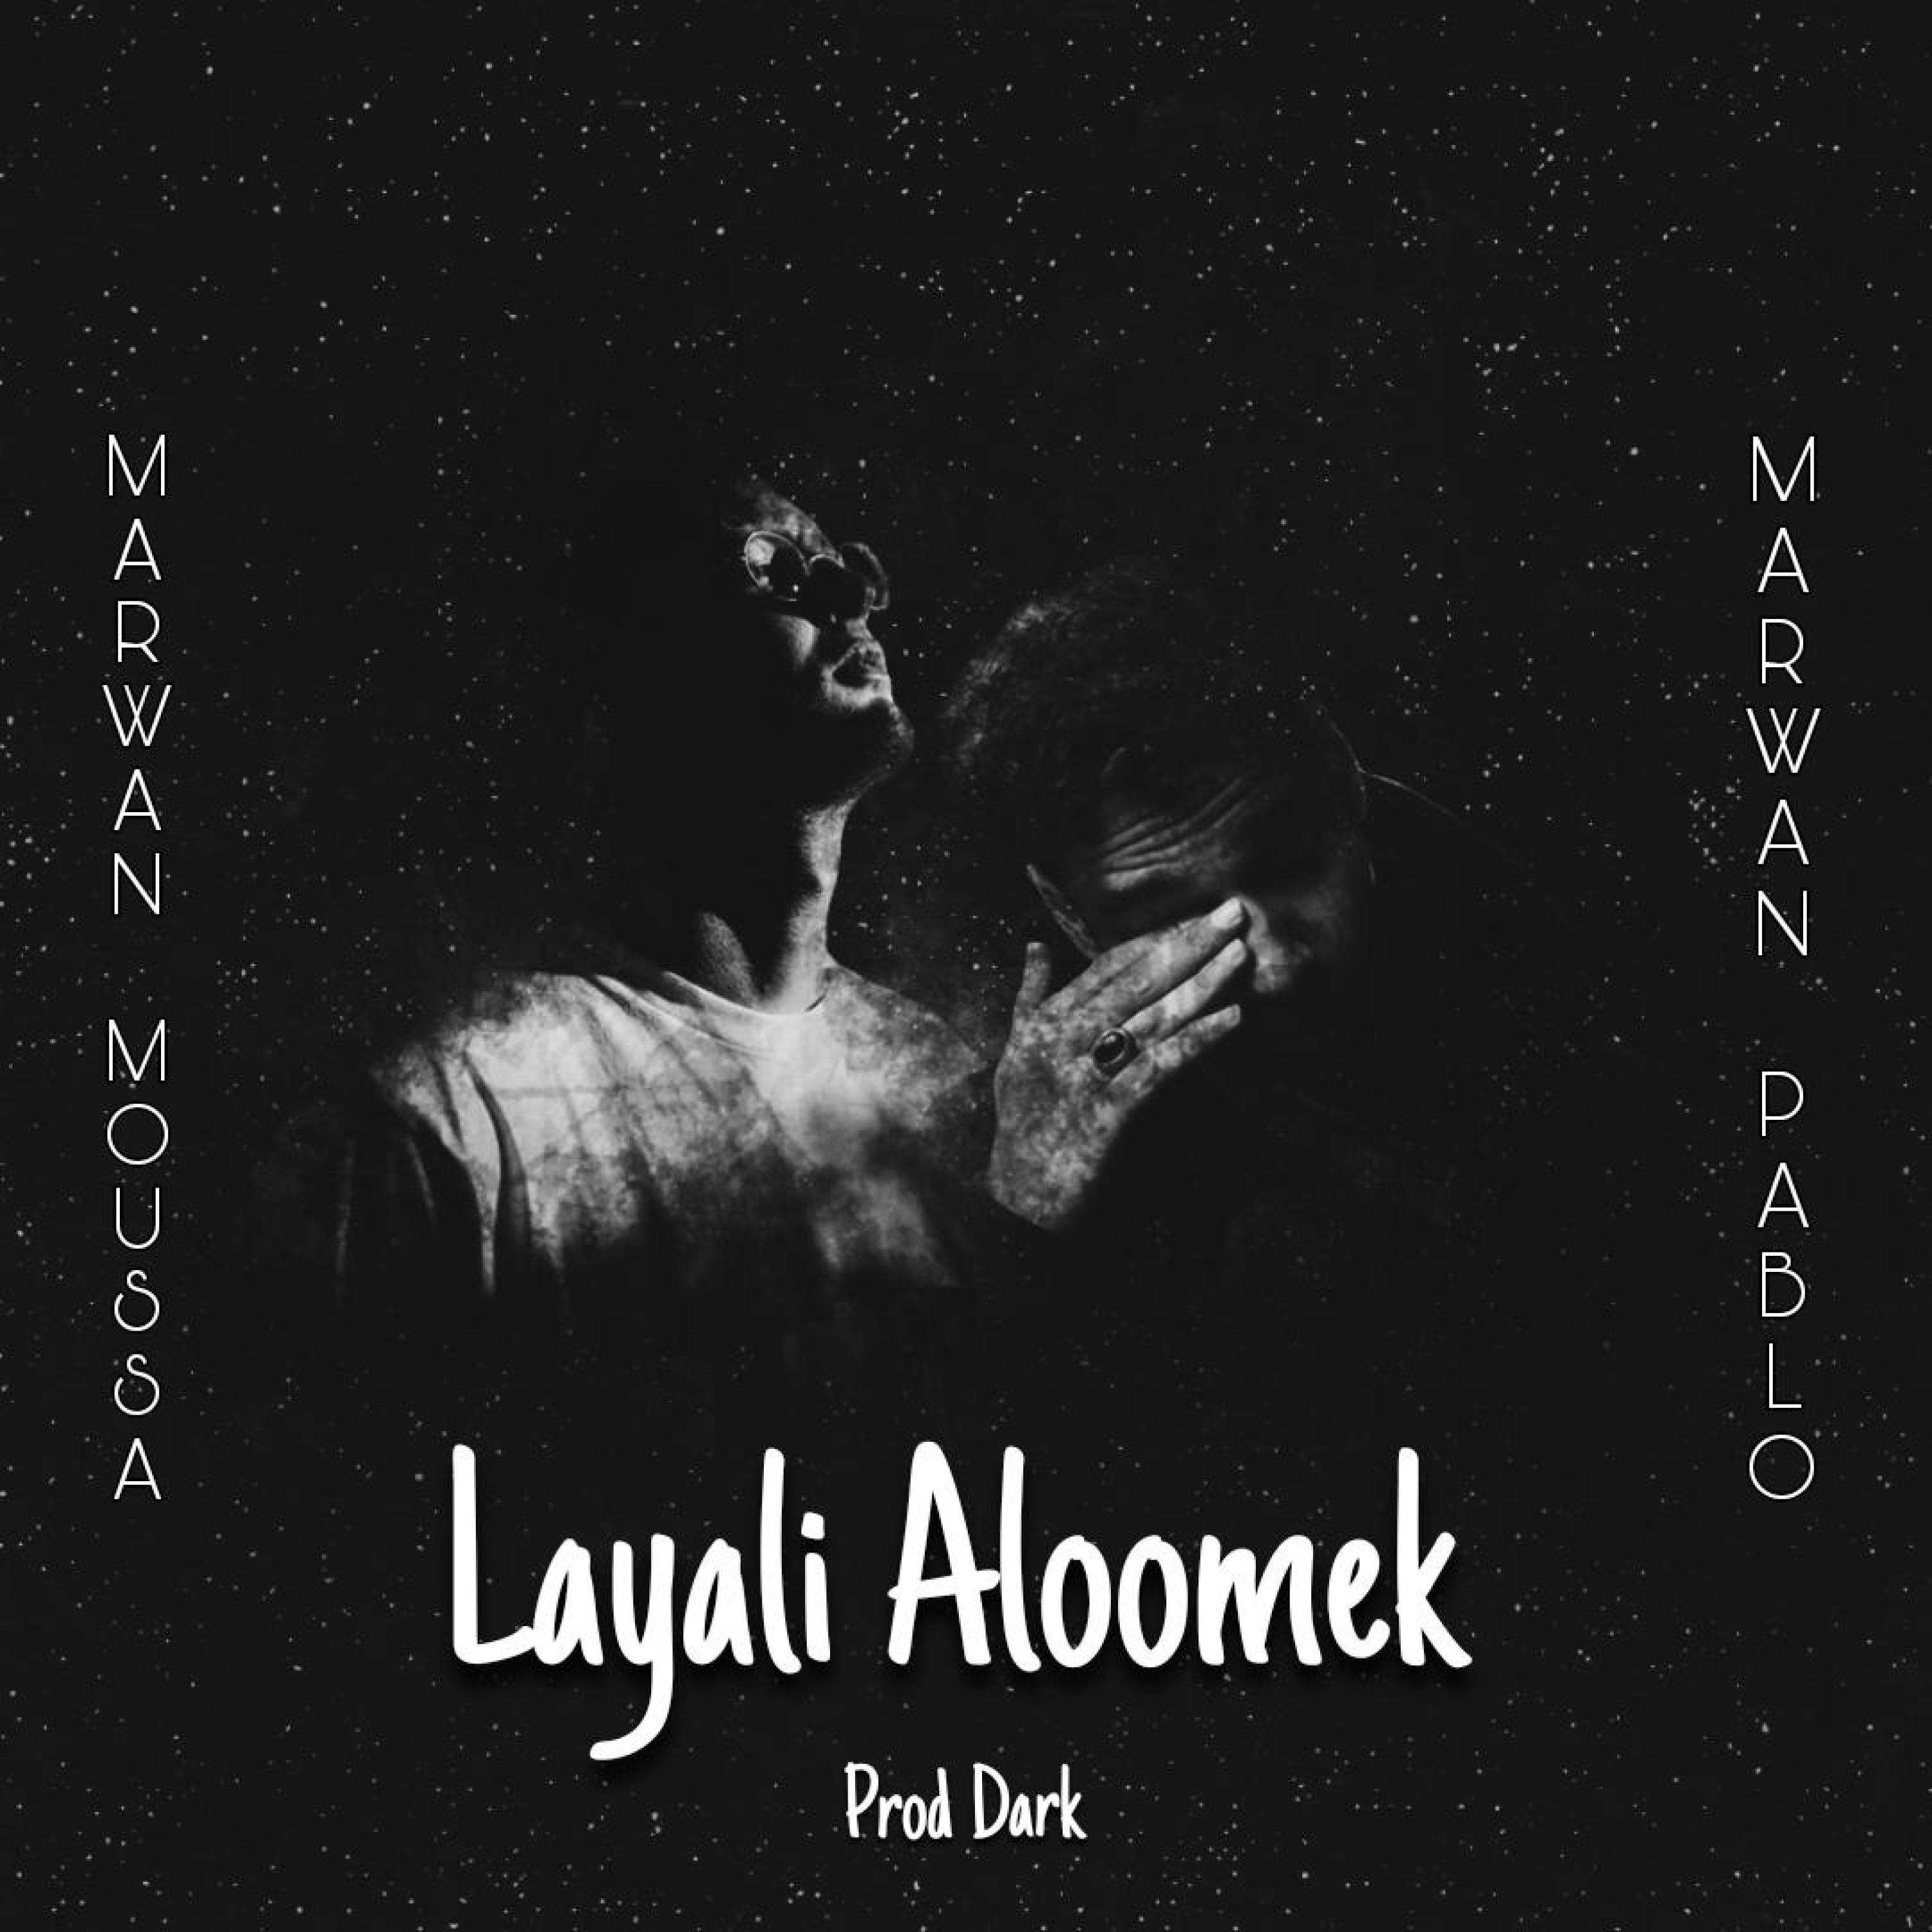 Dark - دارك - Layali Aloomek (feat. Marwan Pablo & Marwan Moussa)